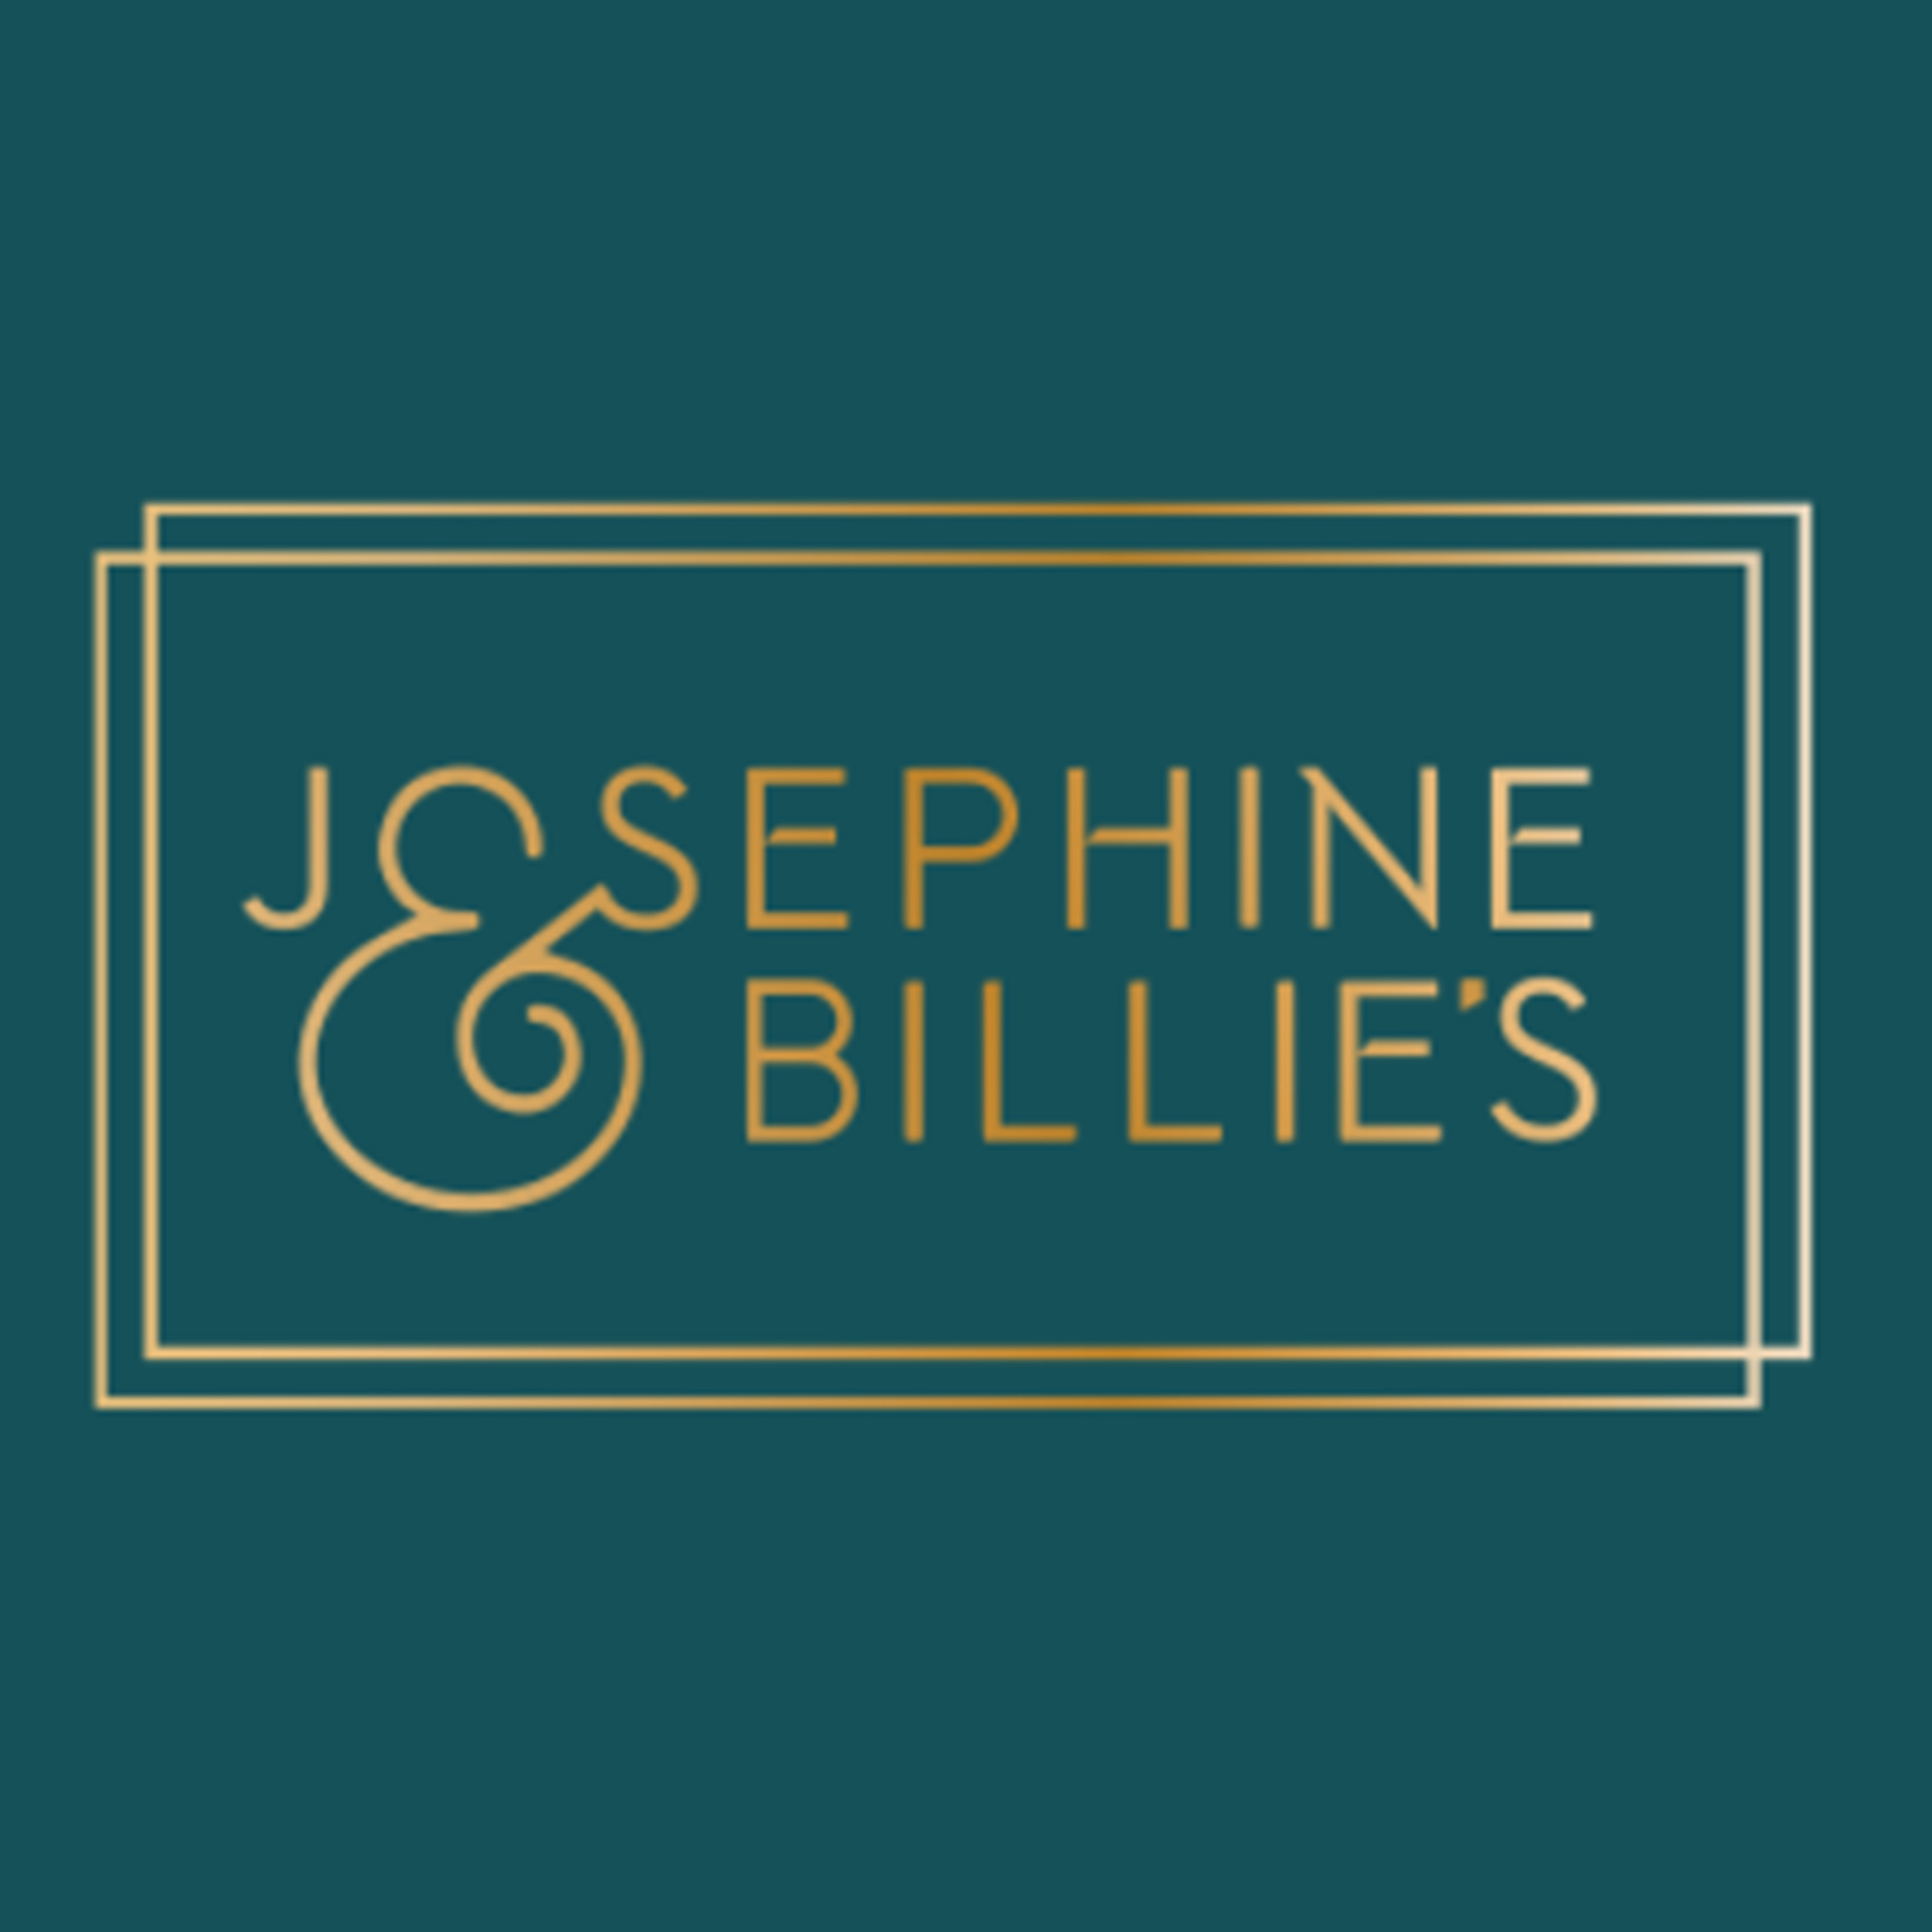 Josephine and Billie's